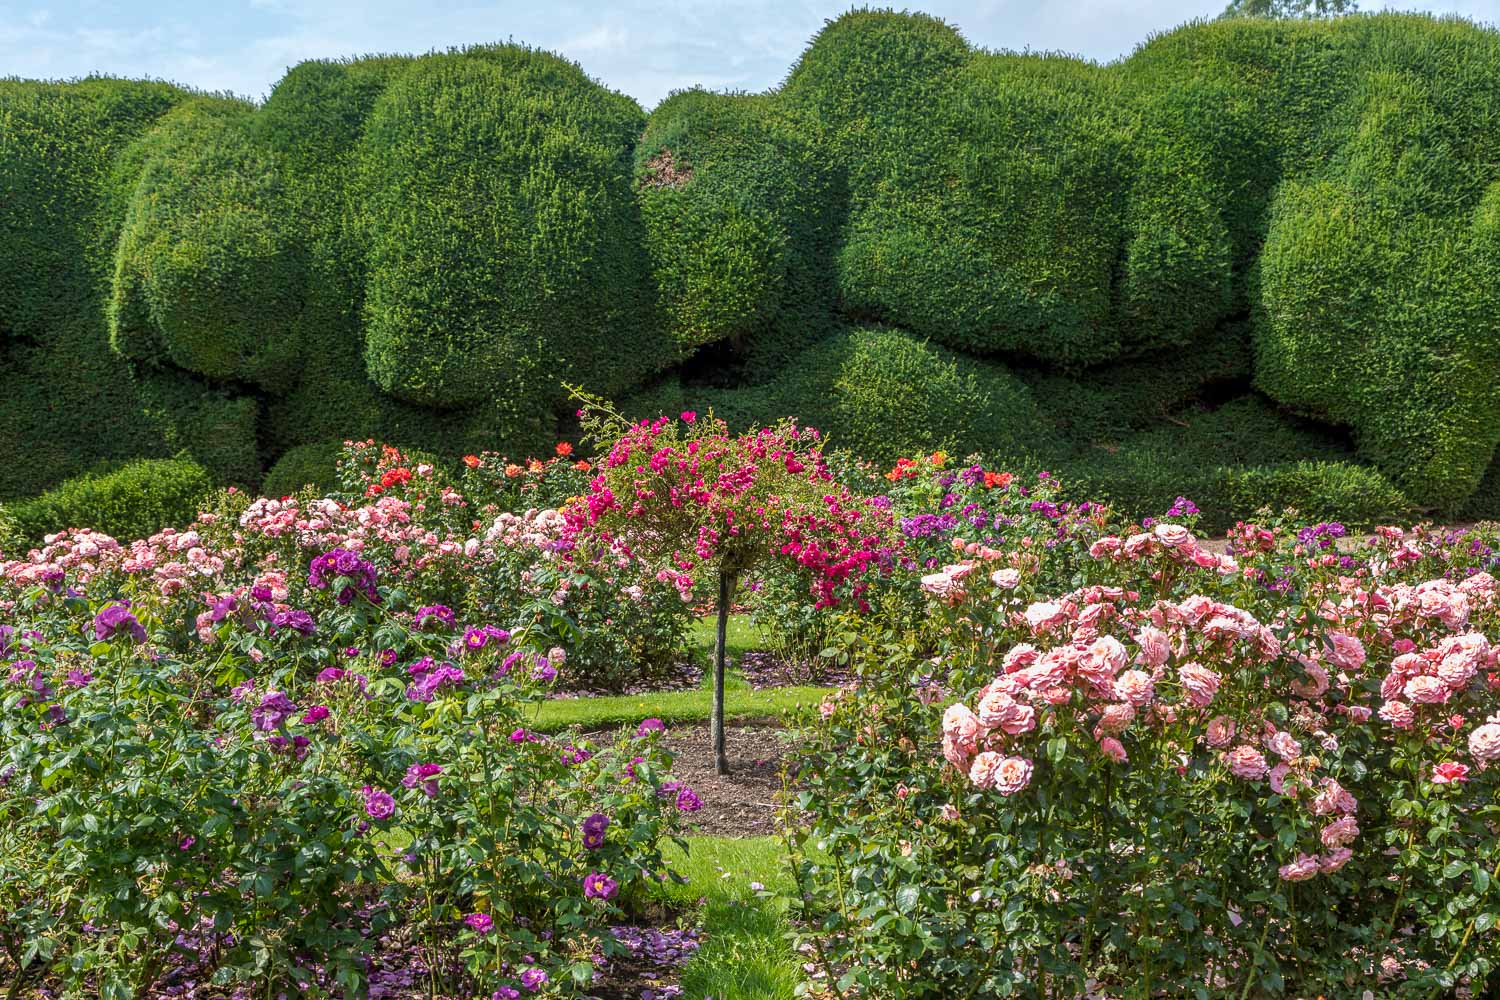 Raby Castle rose garden